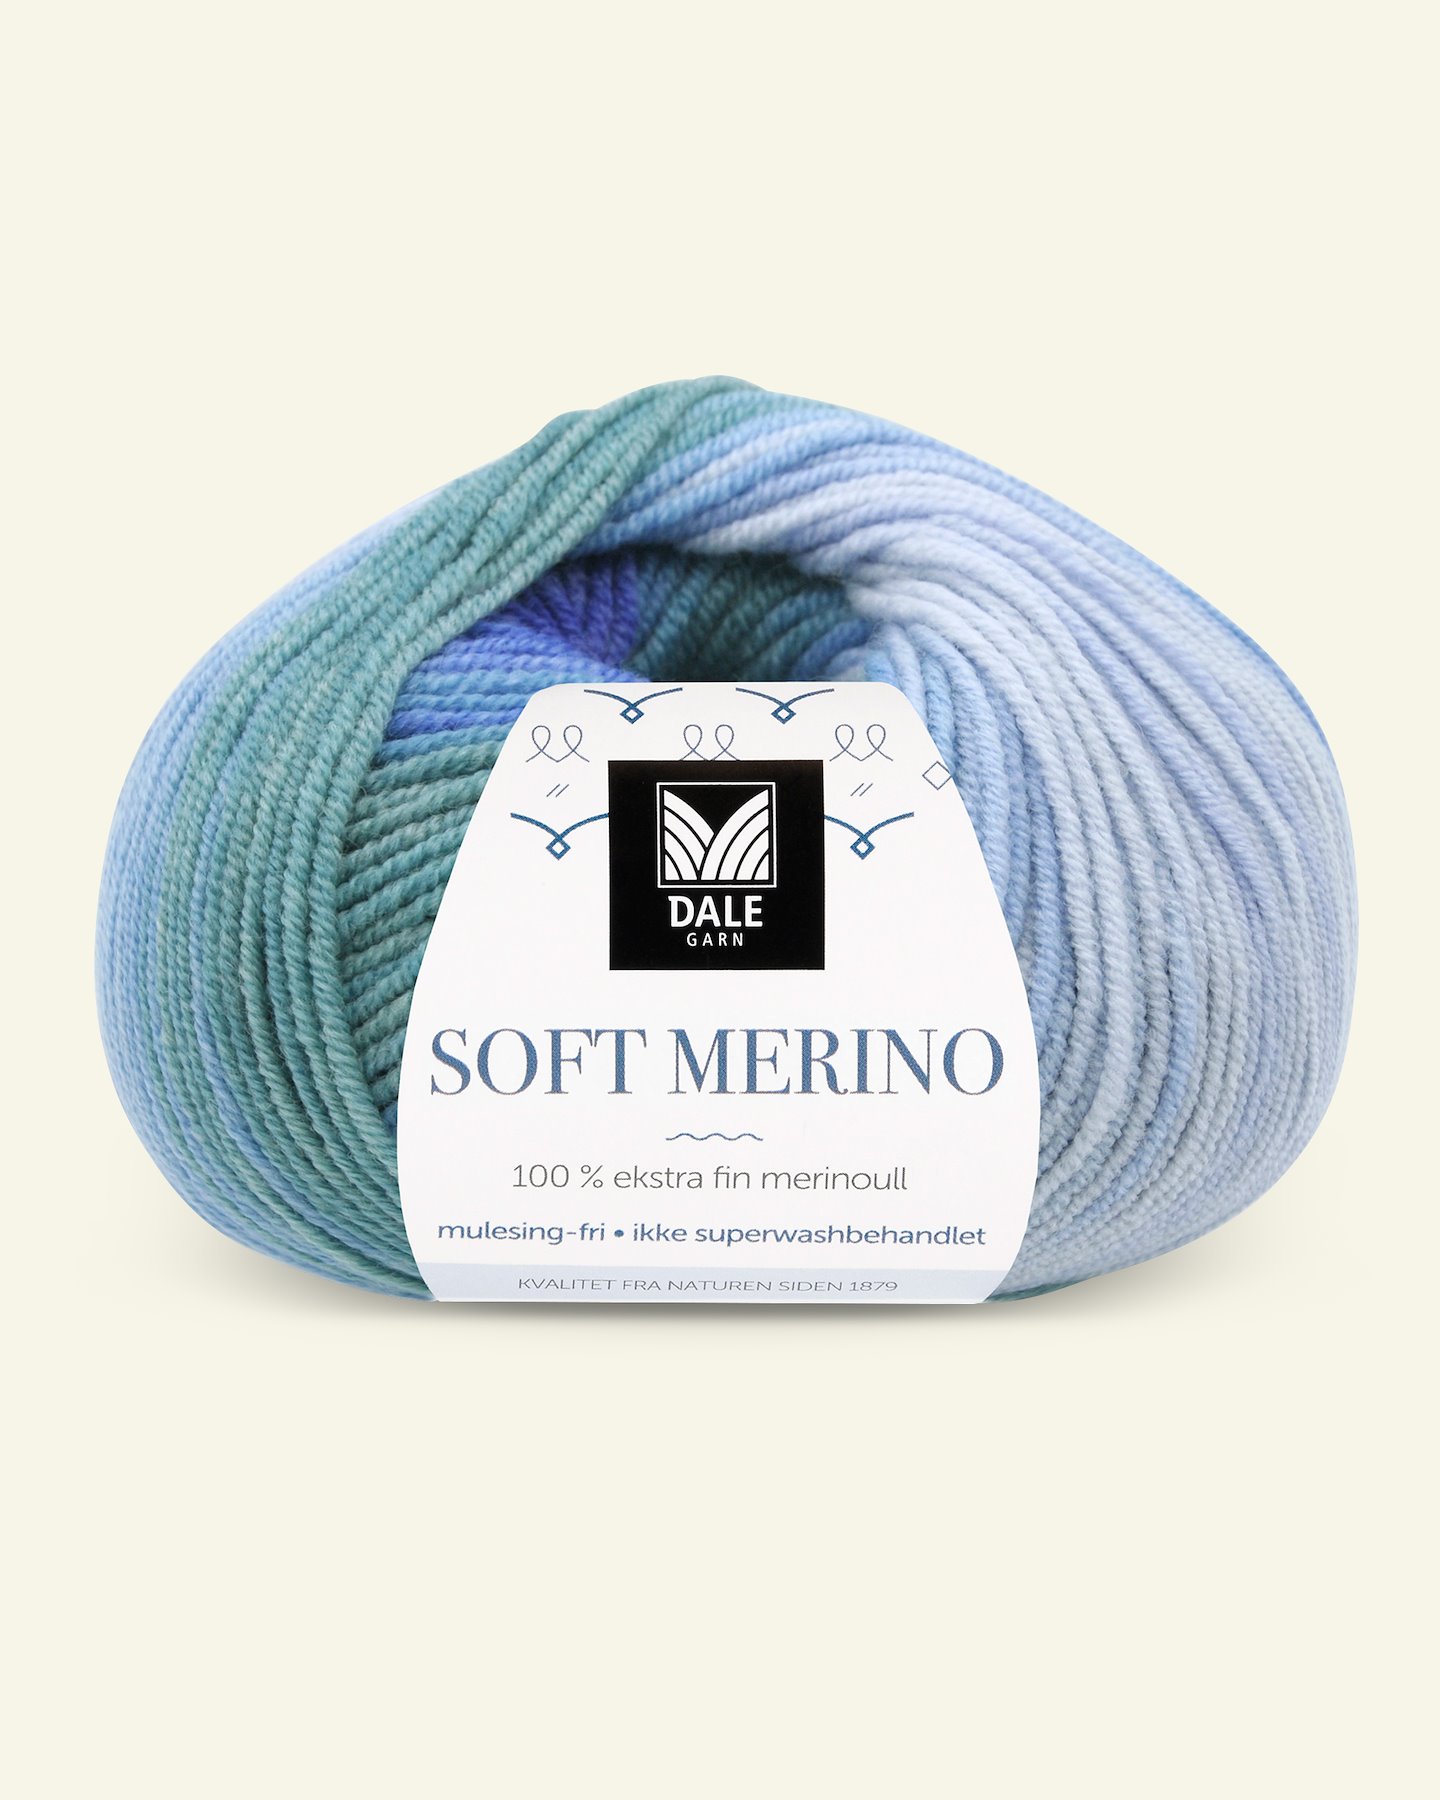 Dale Garn, 100% extra fine merino wool yarn "Soft Merino", blue printed 90001224_pack